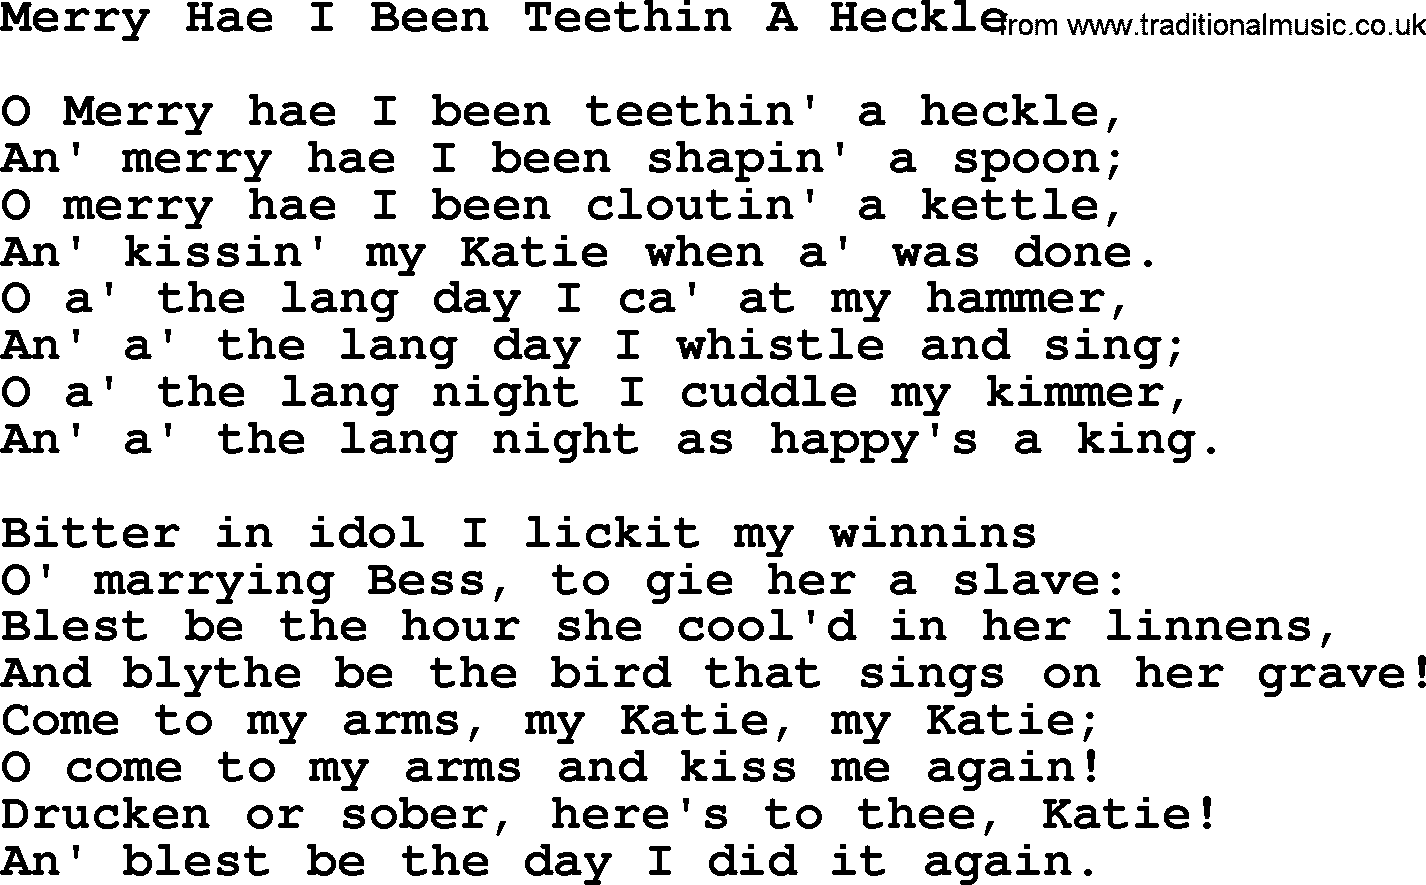 Robert Burns Songs & Lyrics: Merry Hae I Been Teethin A Heckle